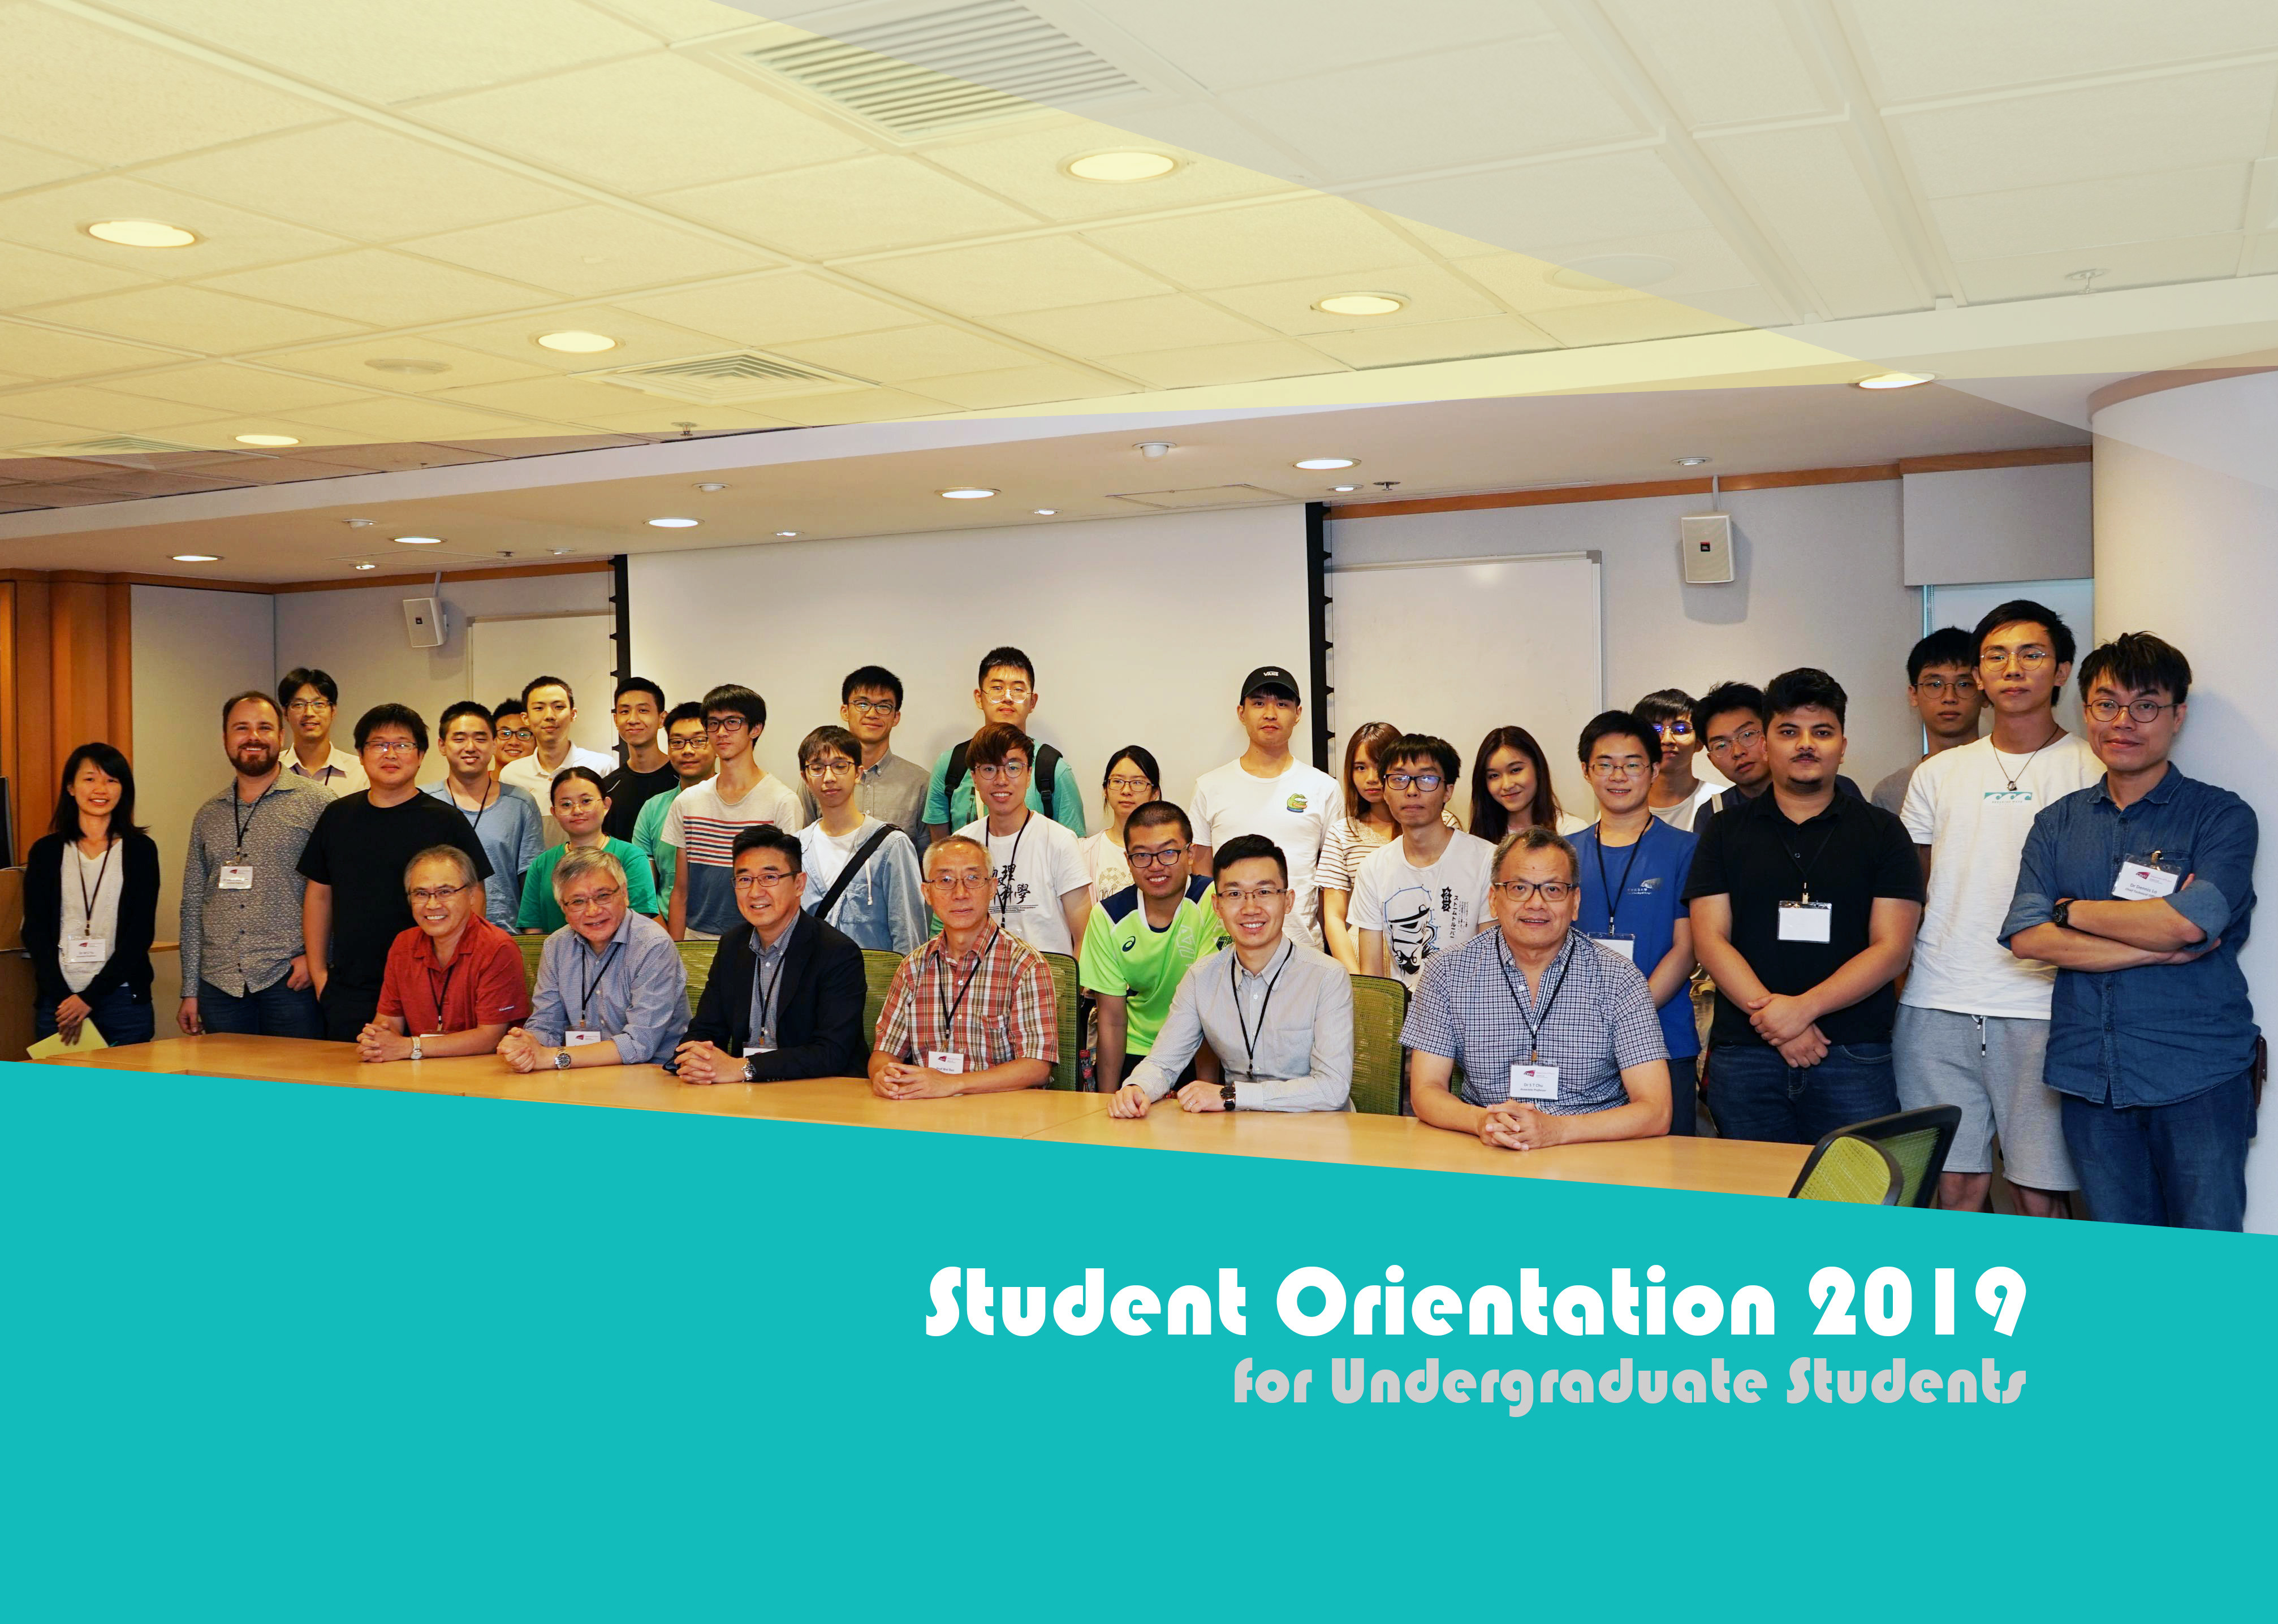 Orientation for Undergraduate Students 2019